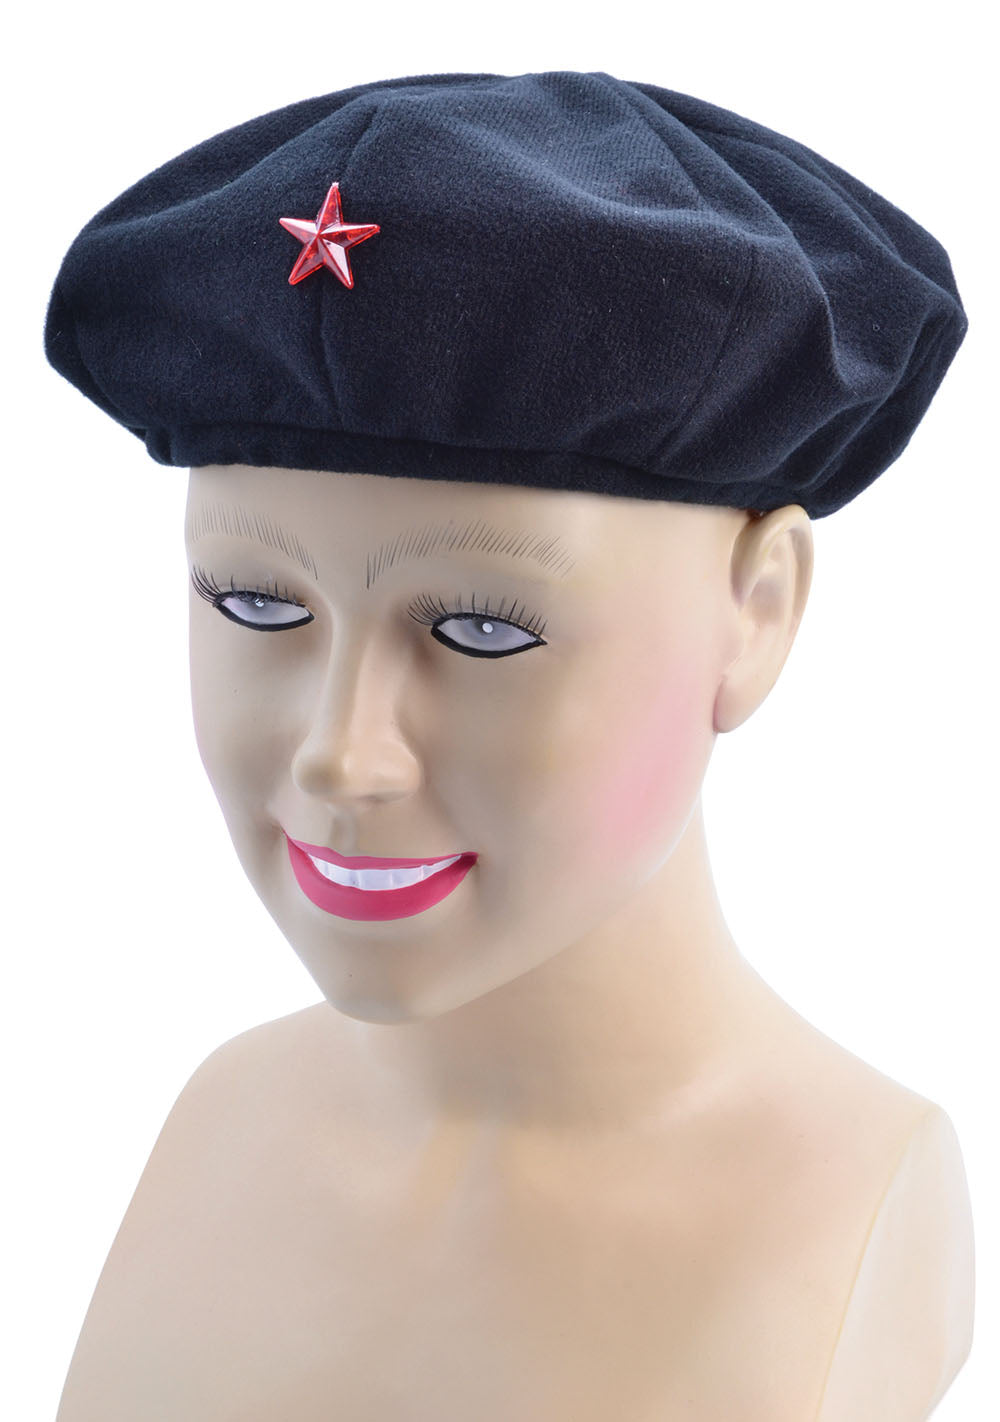 Che Guevara costume Beret hat